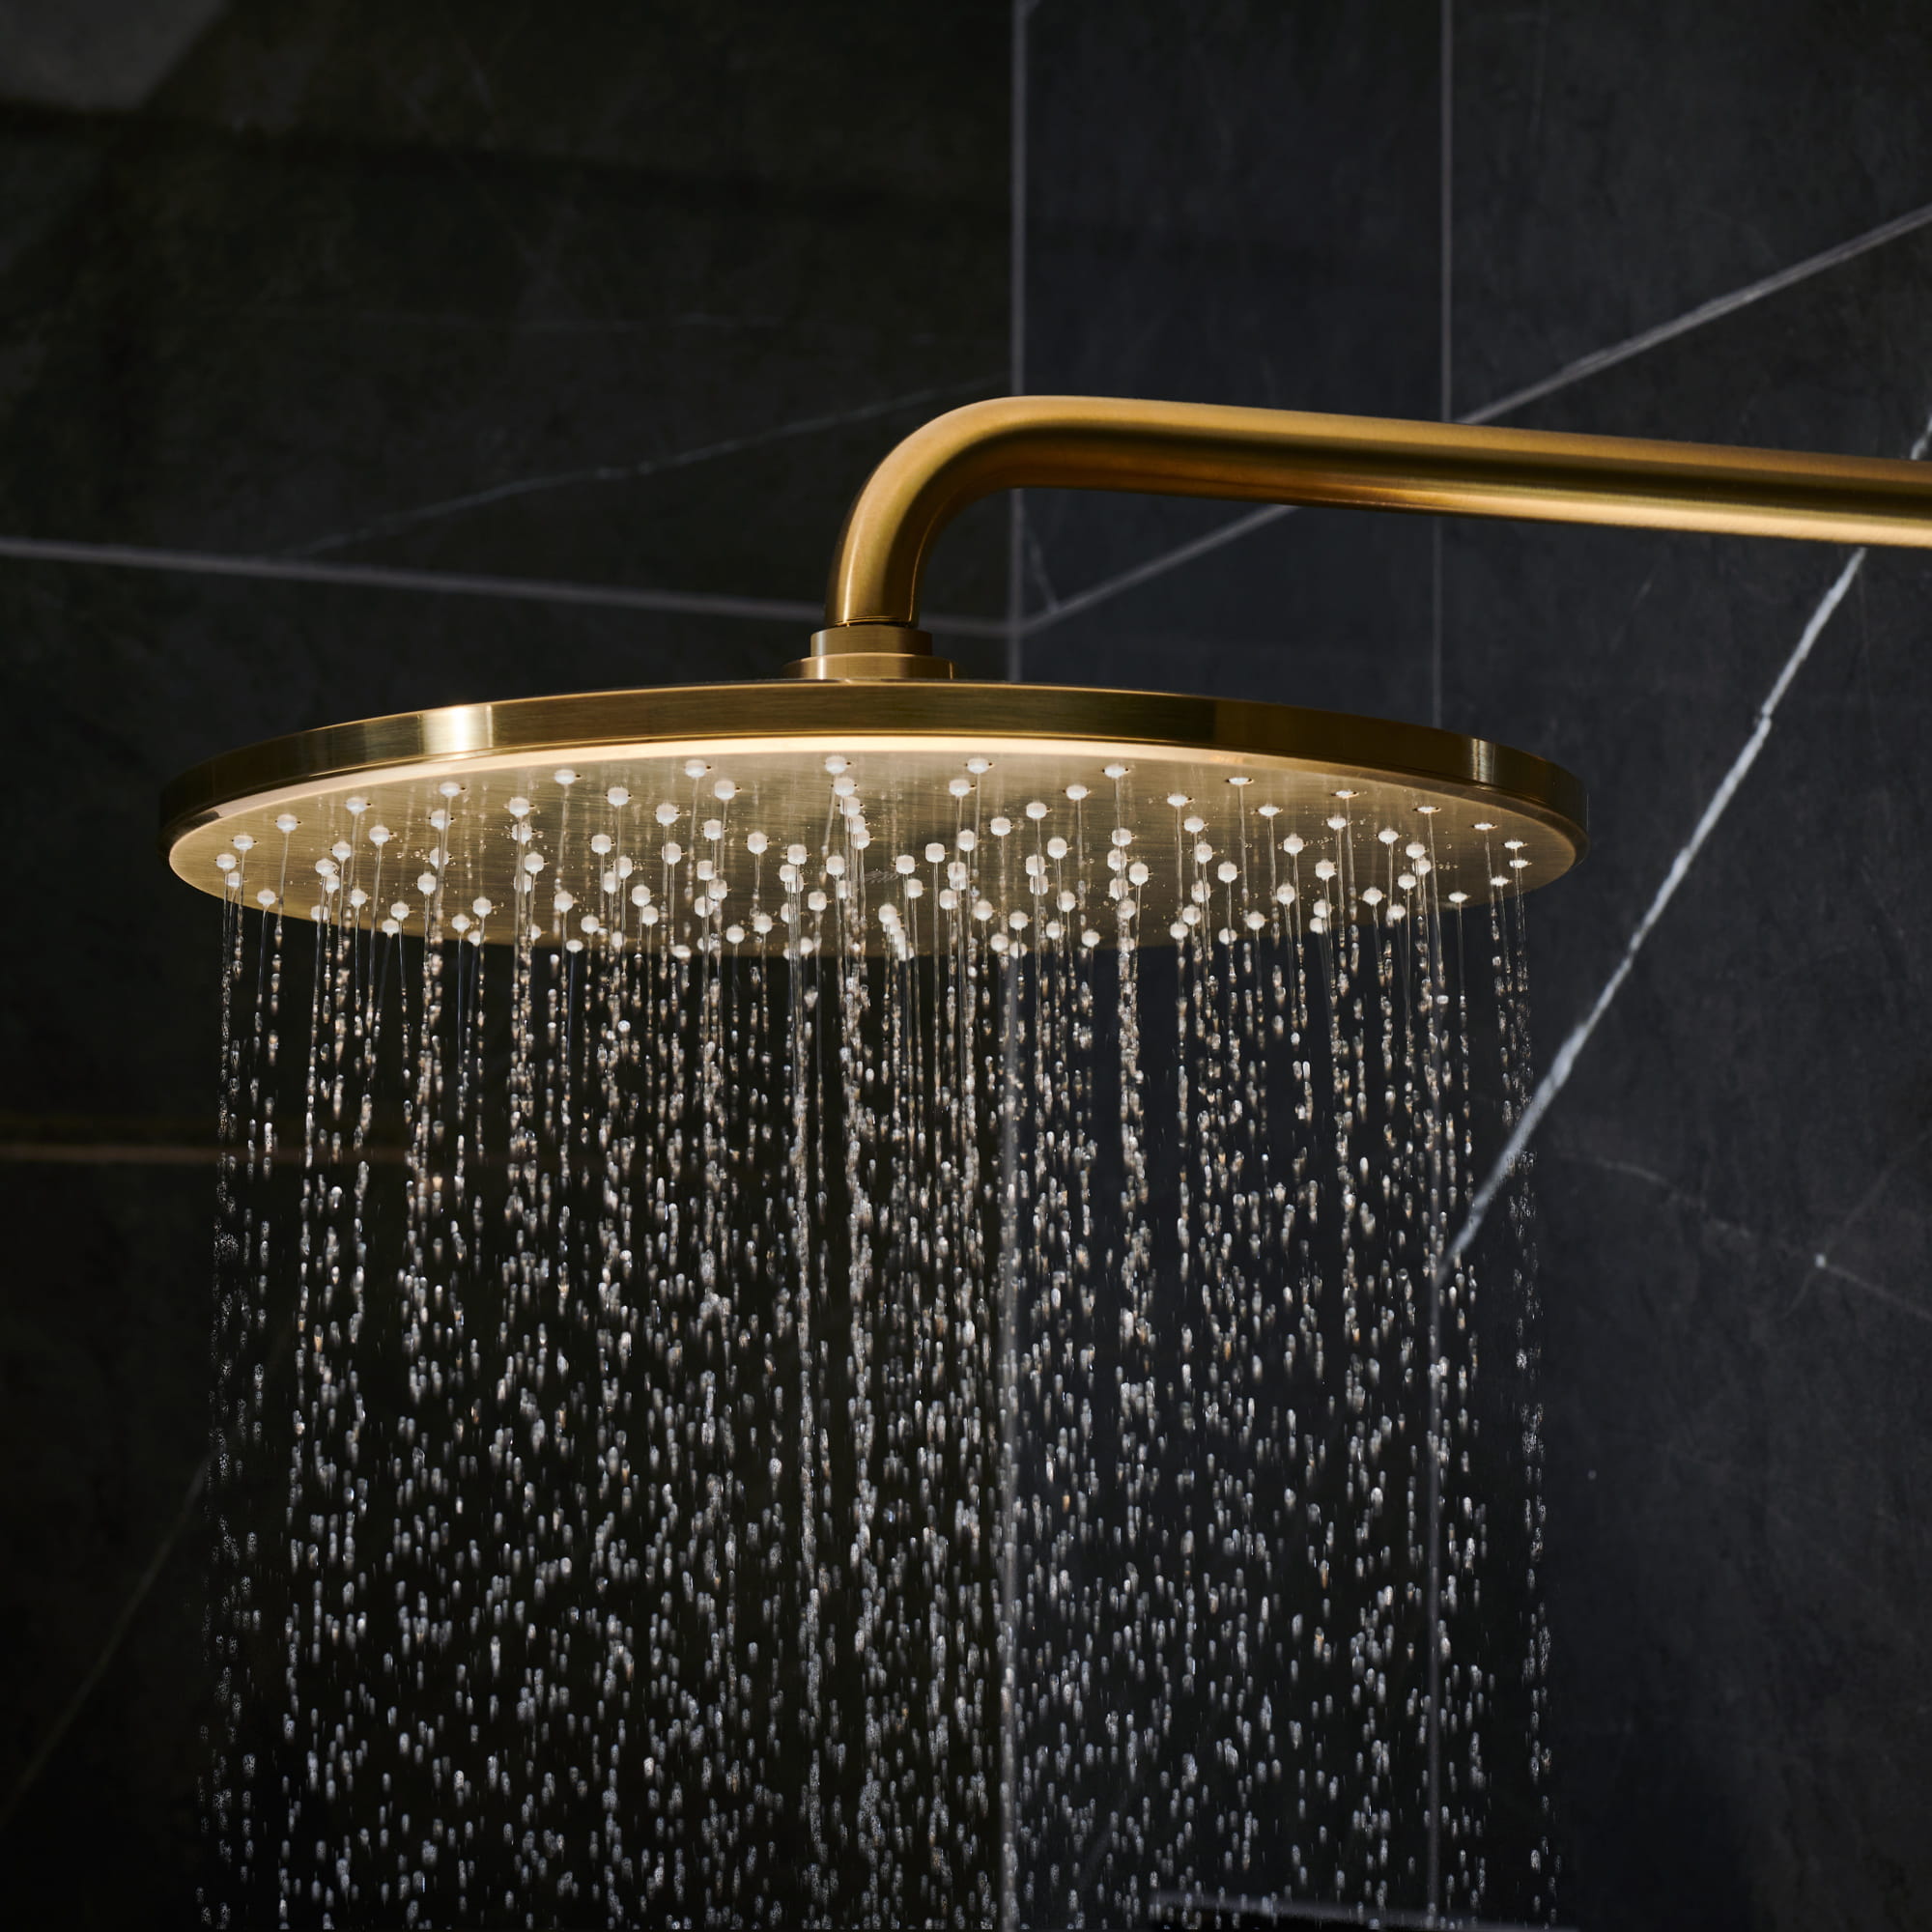 Sistema de ducha Grohe RainshowerGrandera Stick conjunto de ducha 900 7,6l